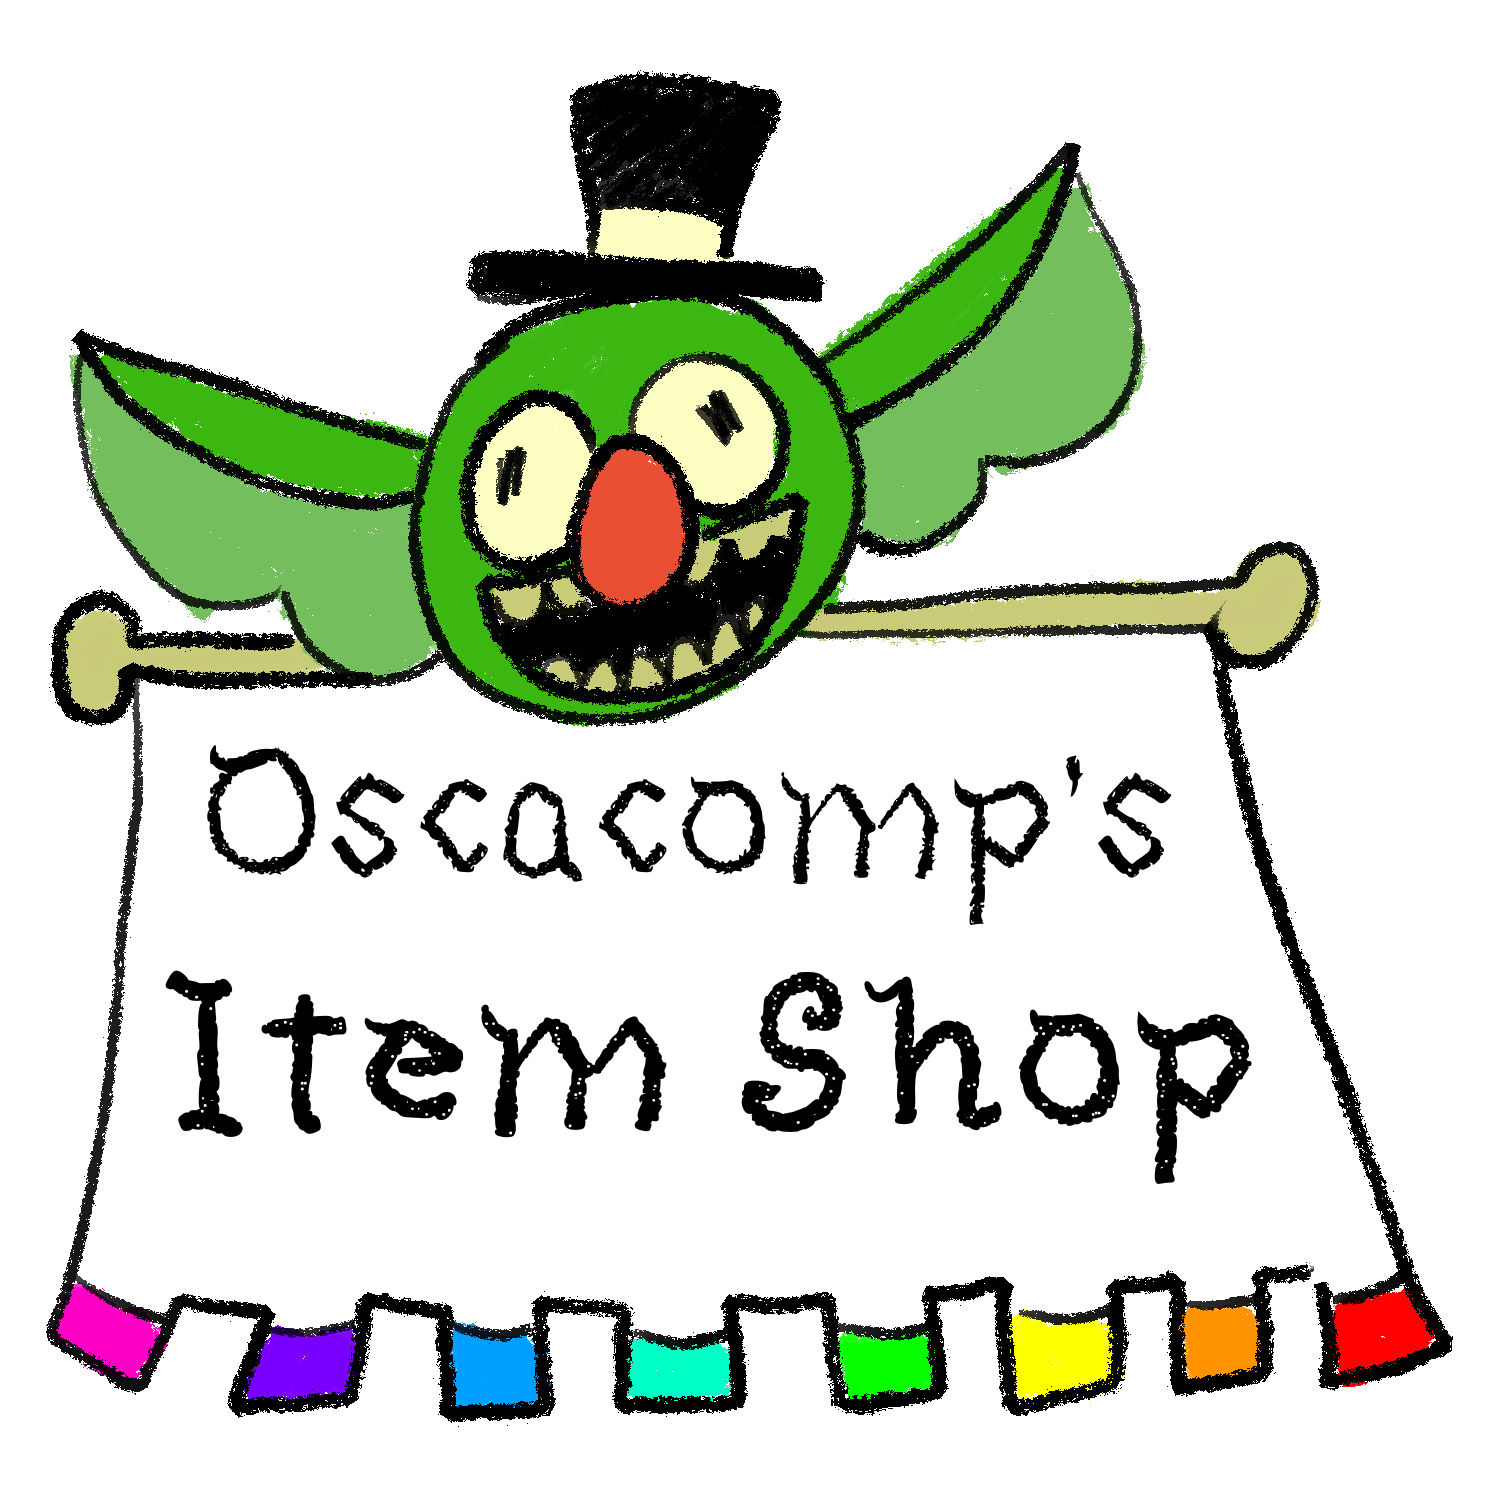 Oscacomp's Item Shop